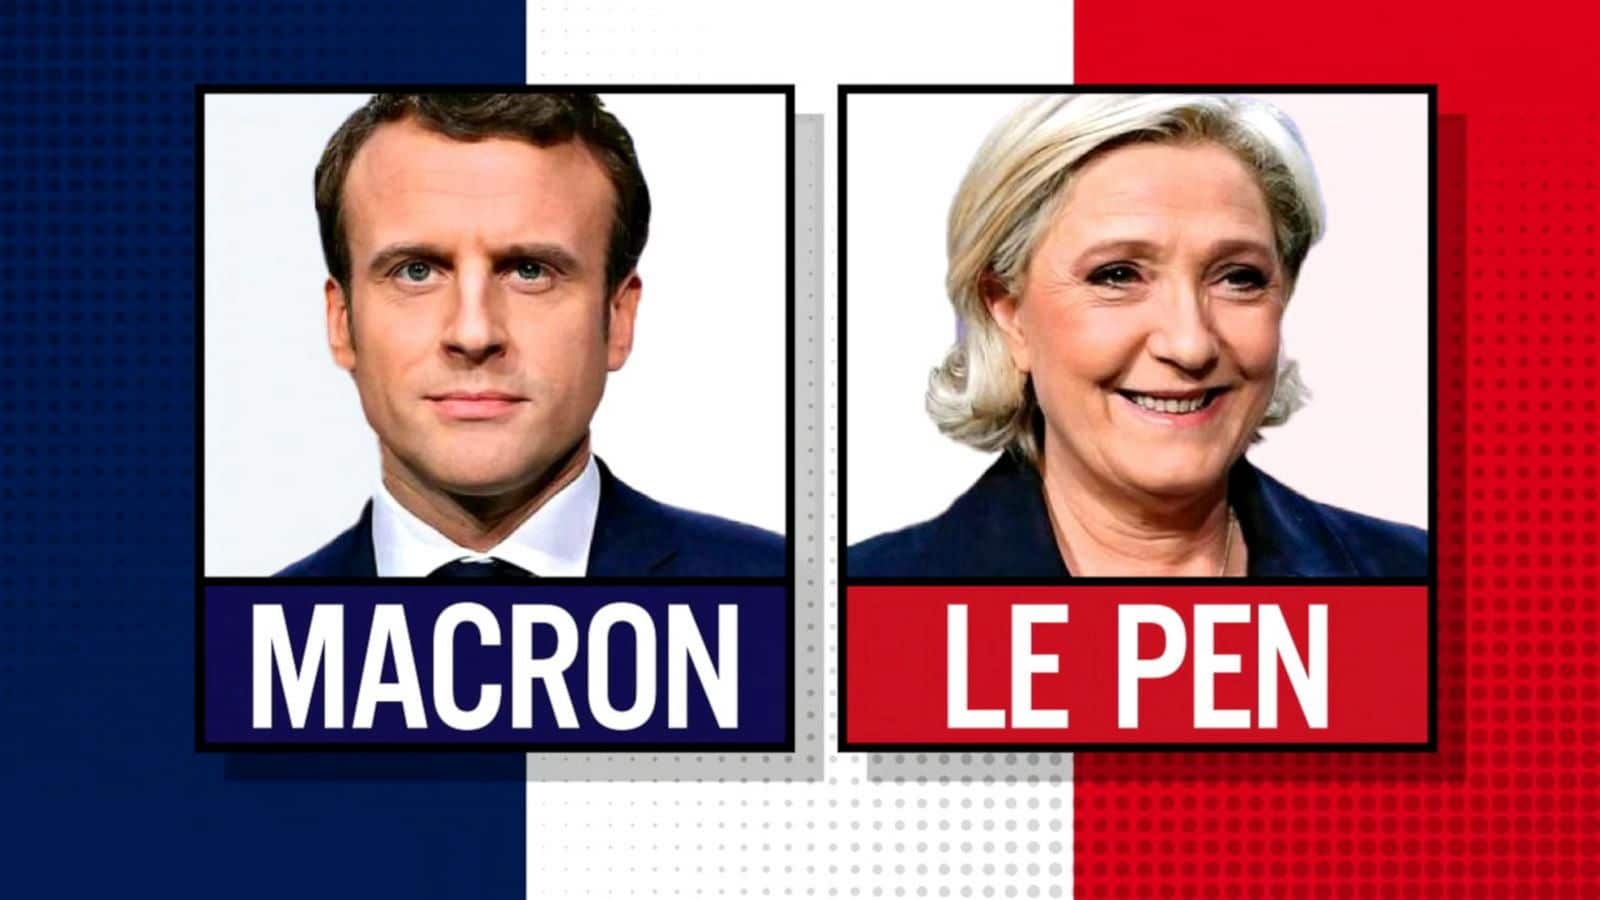 2022 France Presidential Election Results: Macron's Win Against Len Pen